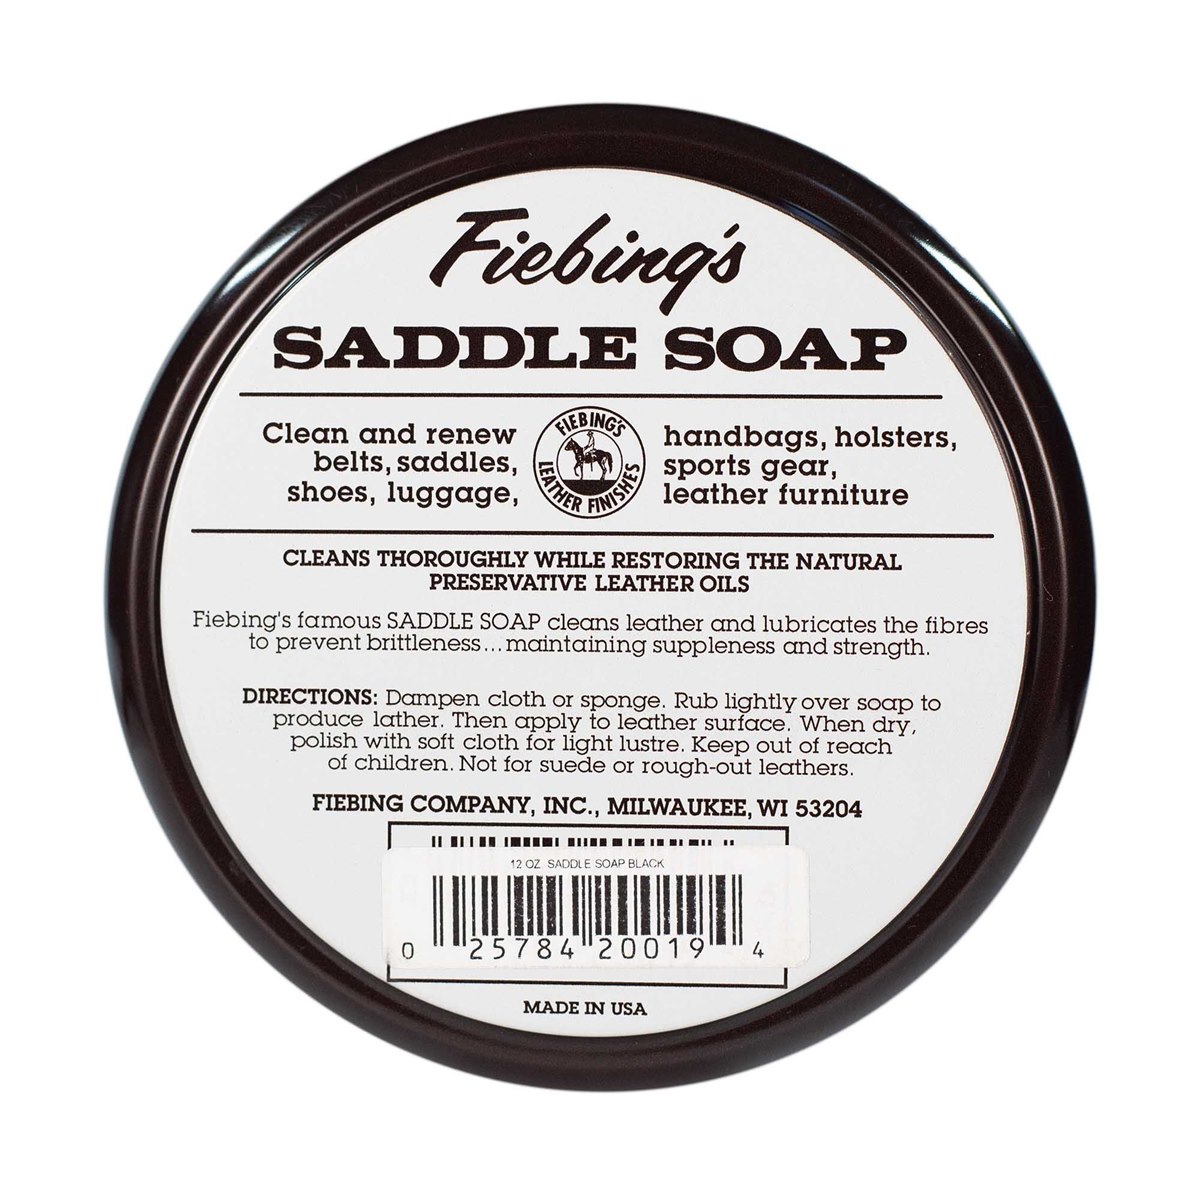 How to Use Fiebings Saddle Soap Black